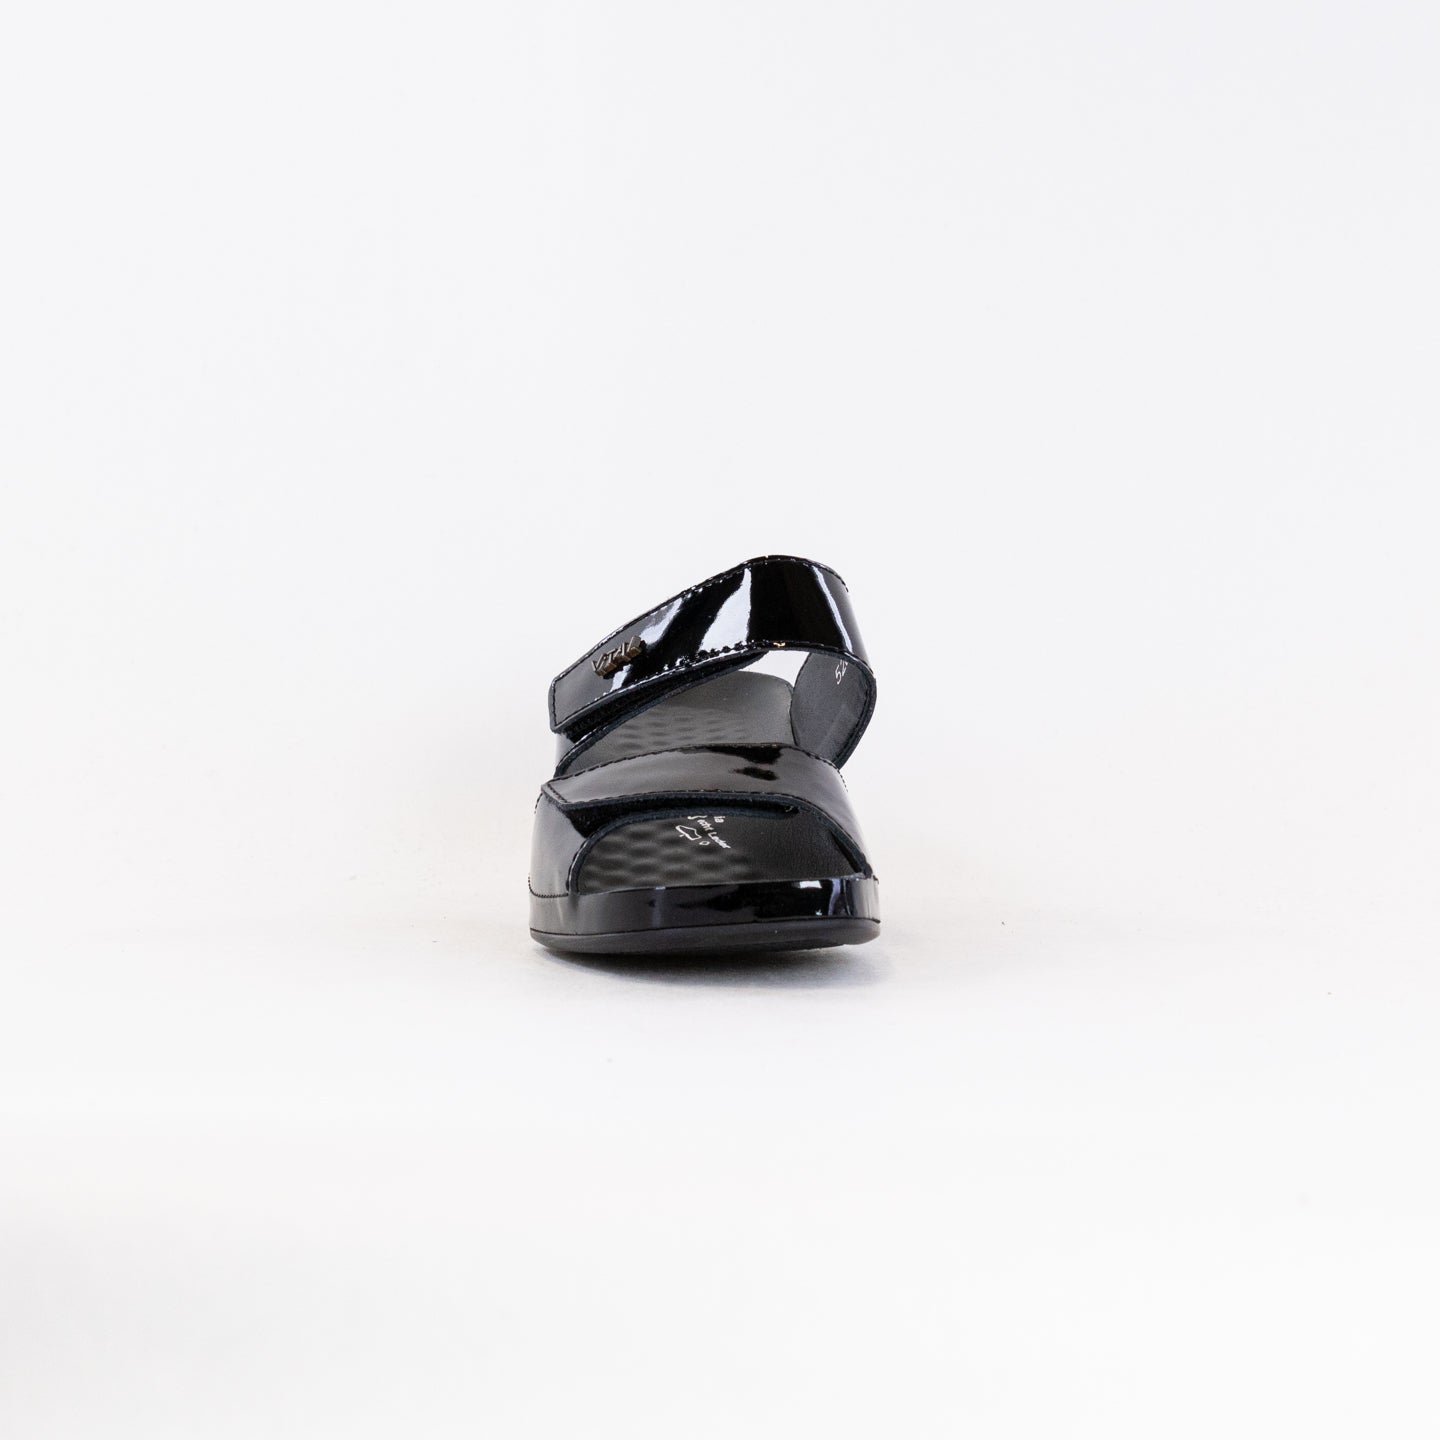 Vital Joy Mule Sandal (Women's) - Black Patent